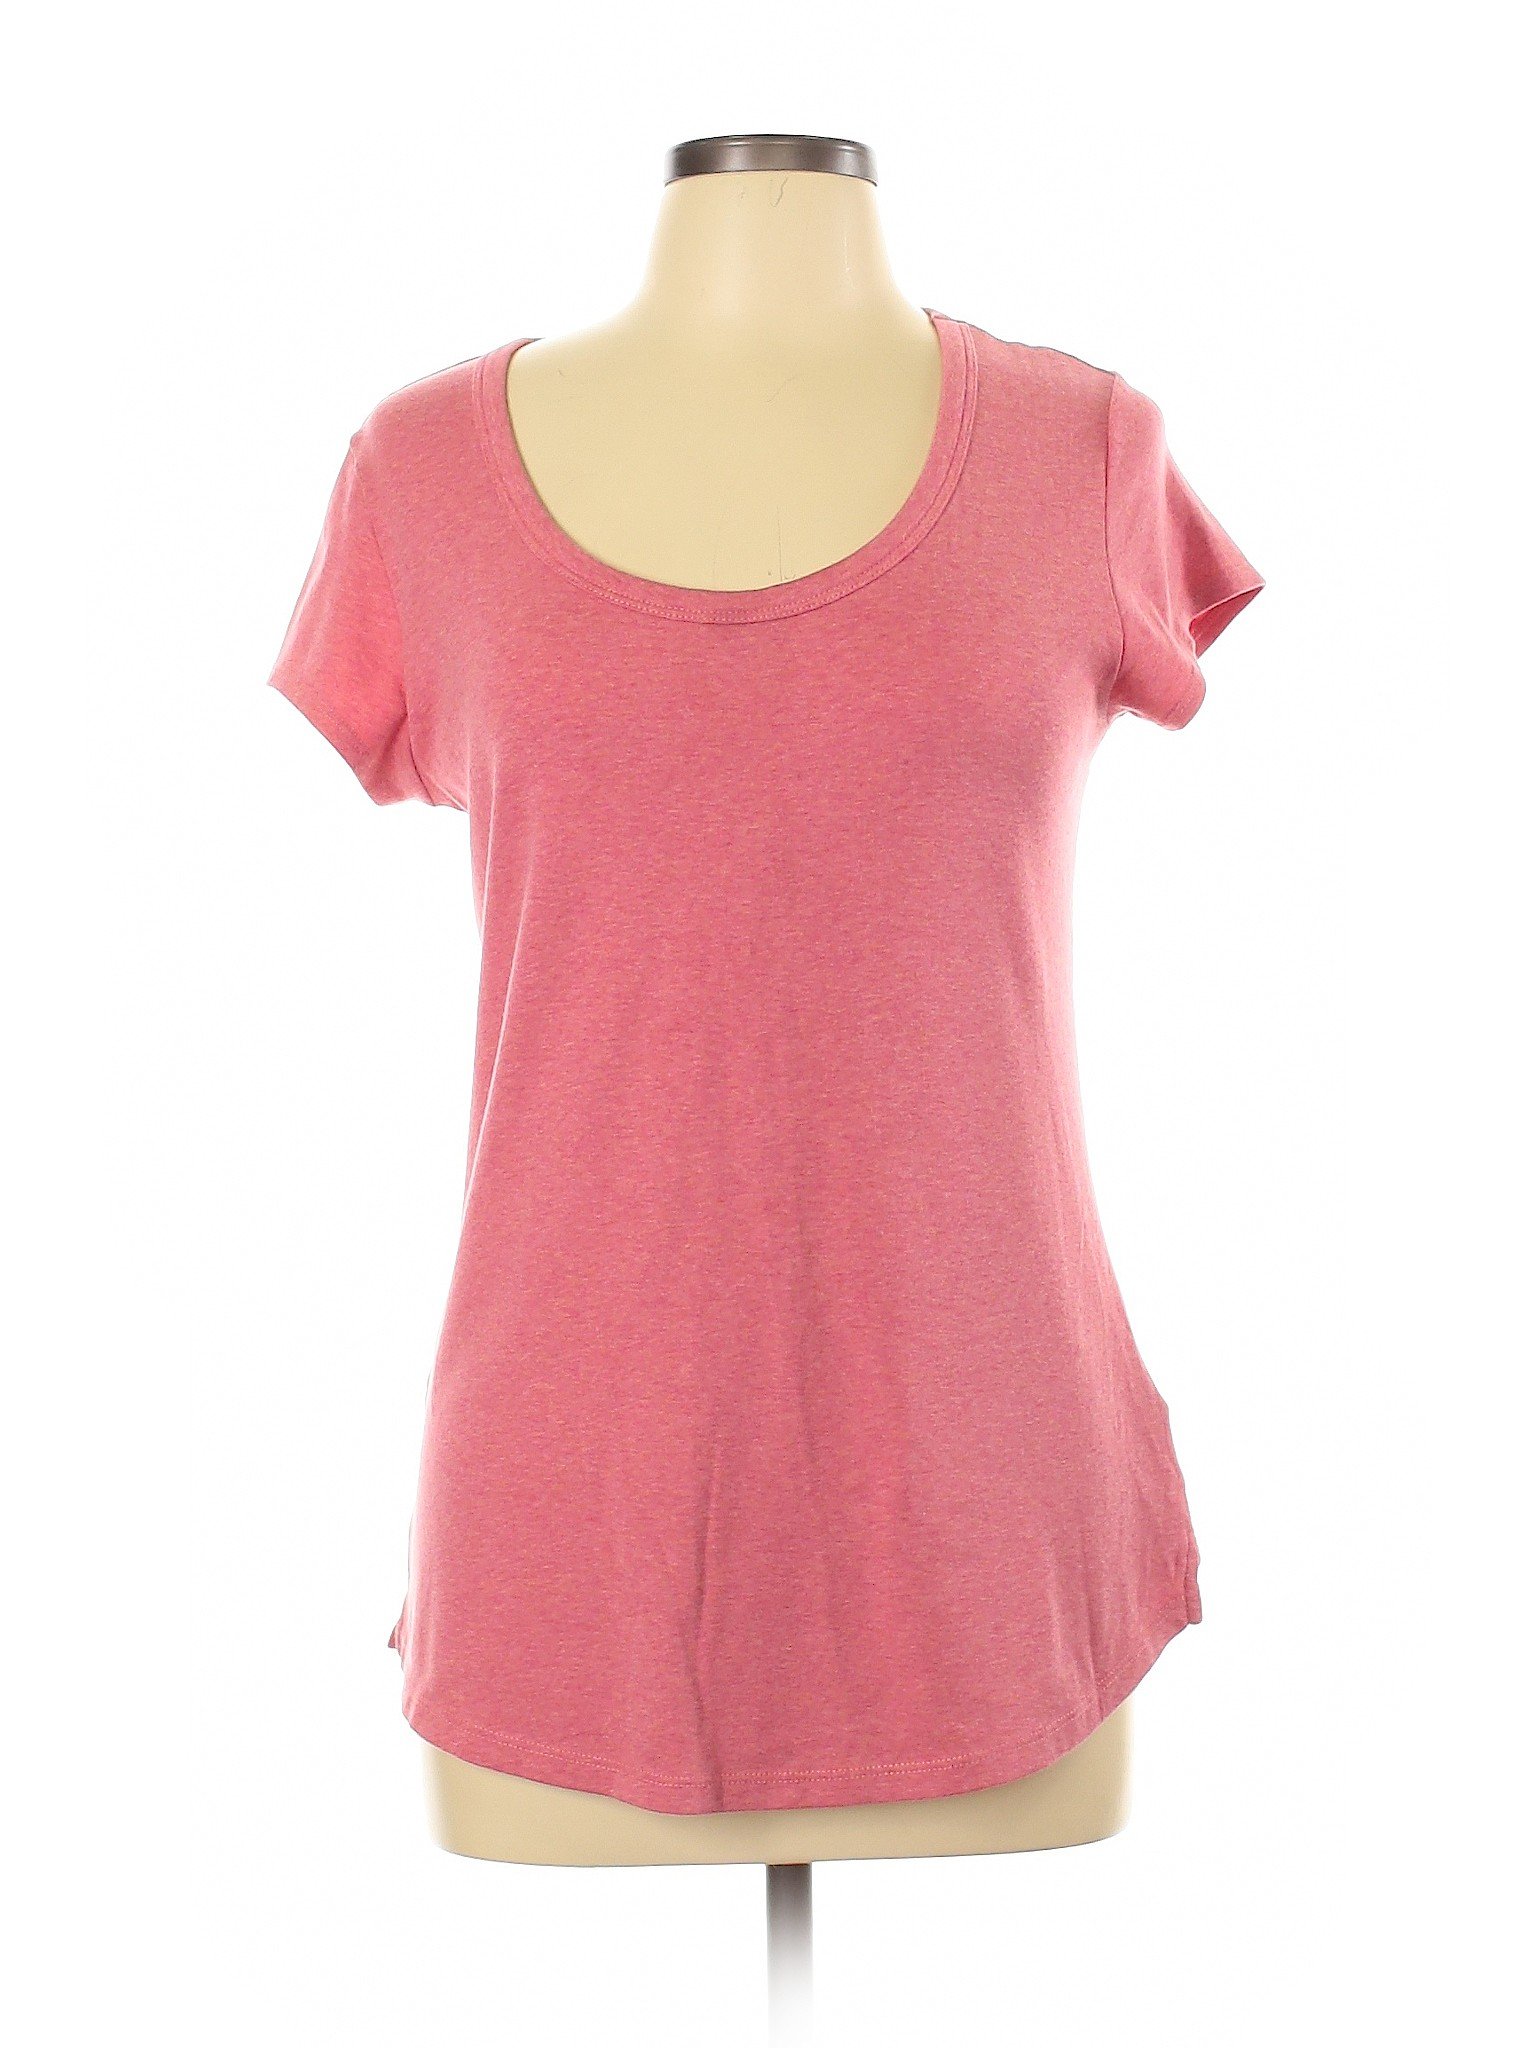 Cynthia Rowley TJX Women Pink Short Sleeve T-Shirt L | eBay